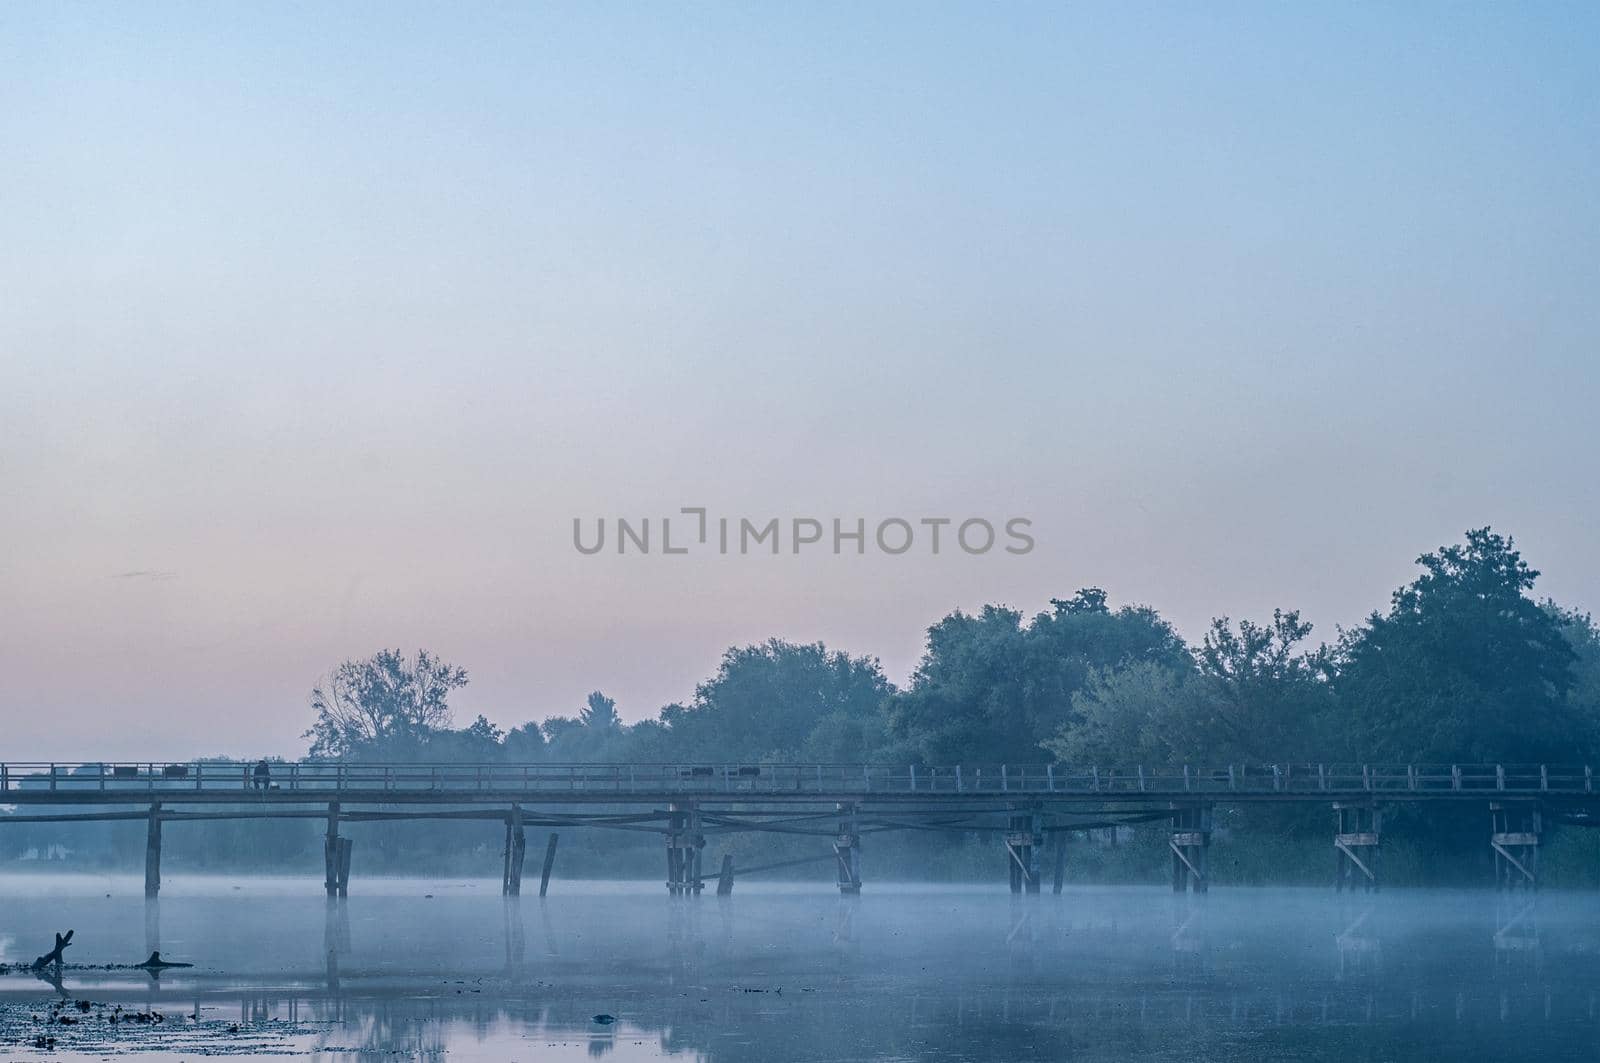 Morning Wooden bridge. Bila Tserkva Ukraine 2019